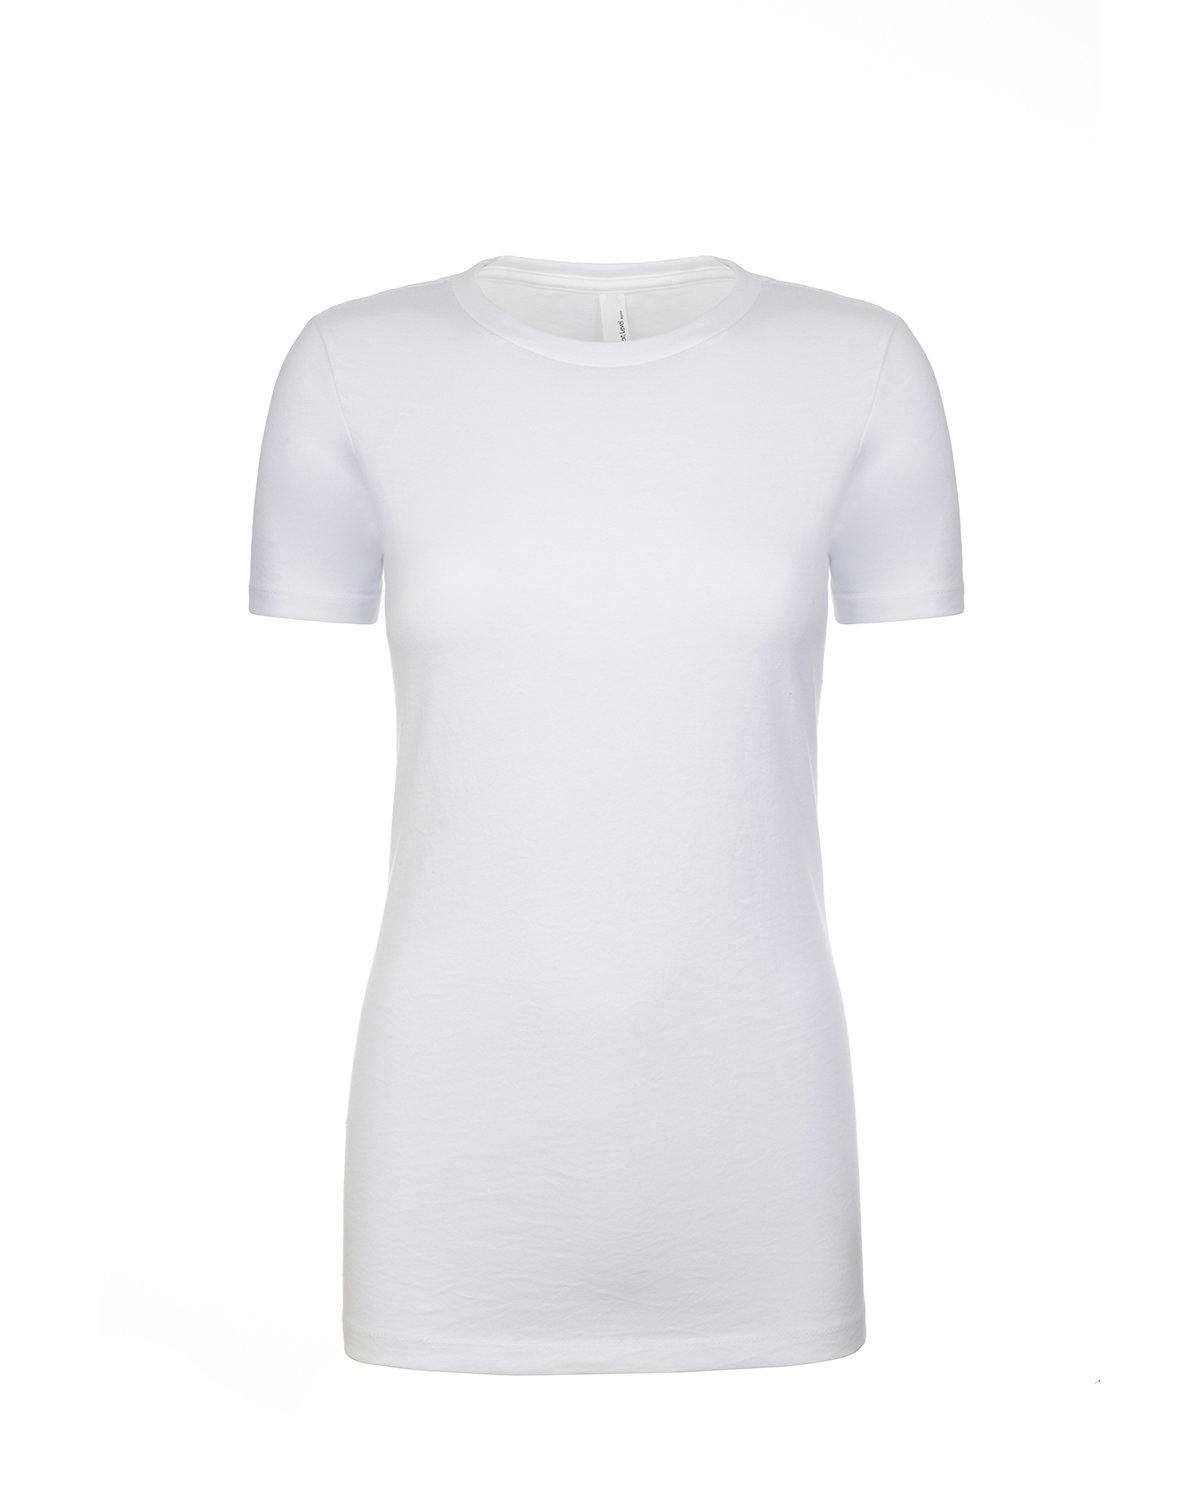 Image for Ladies' CVC T-Shirt